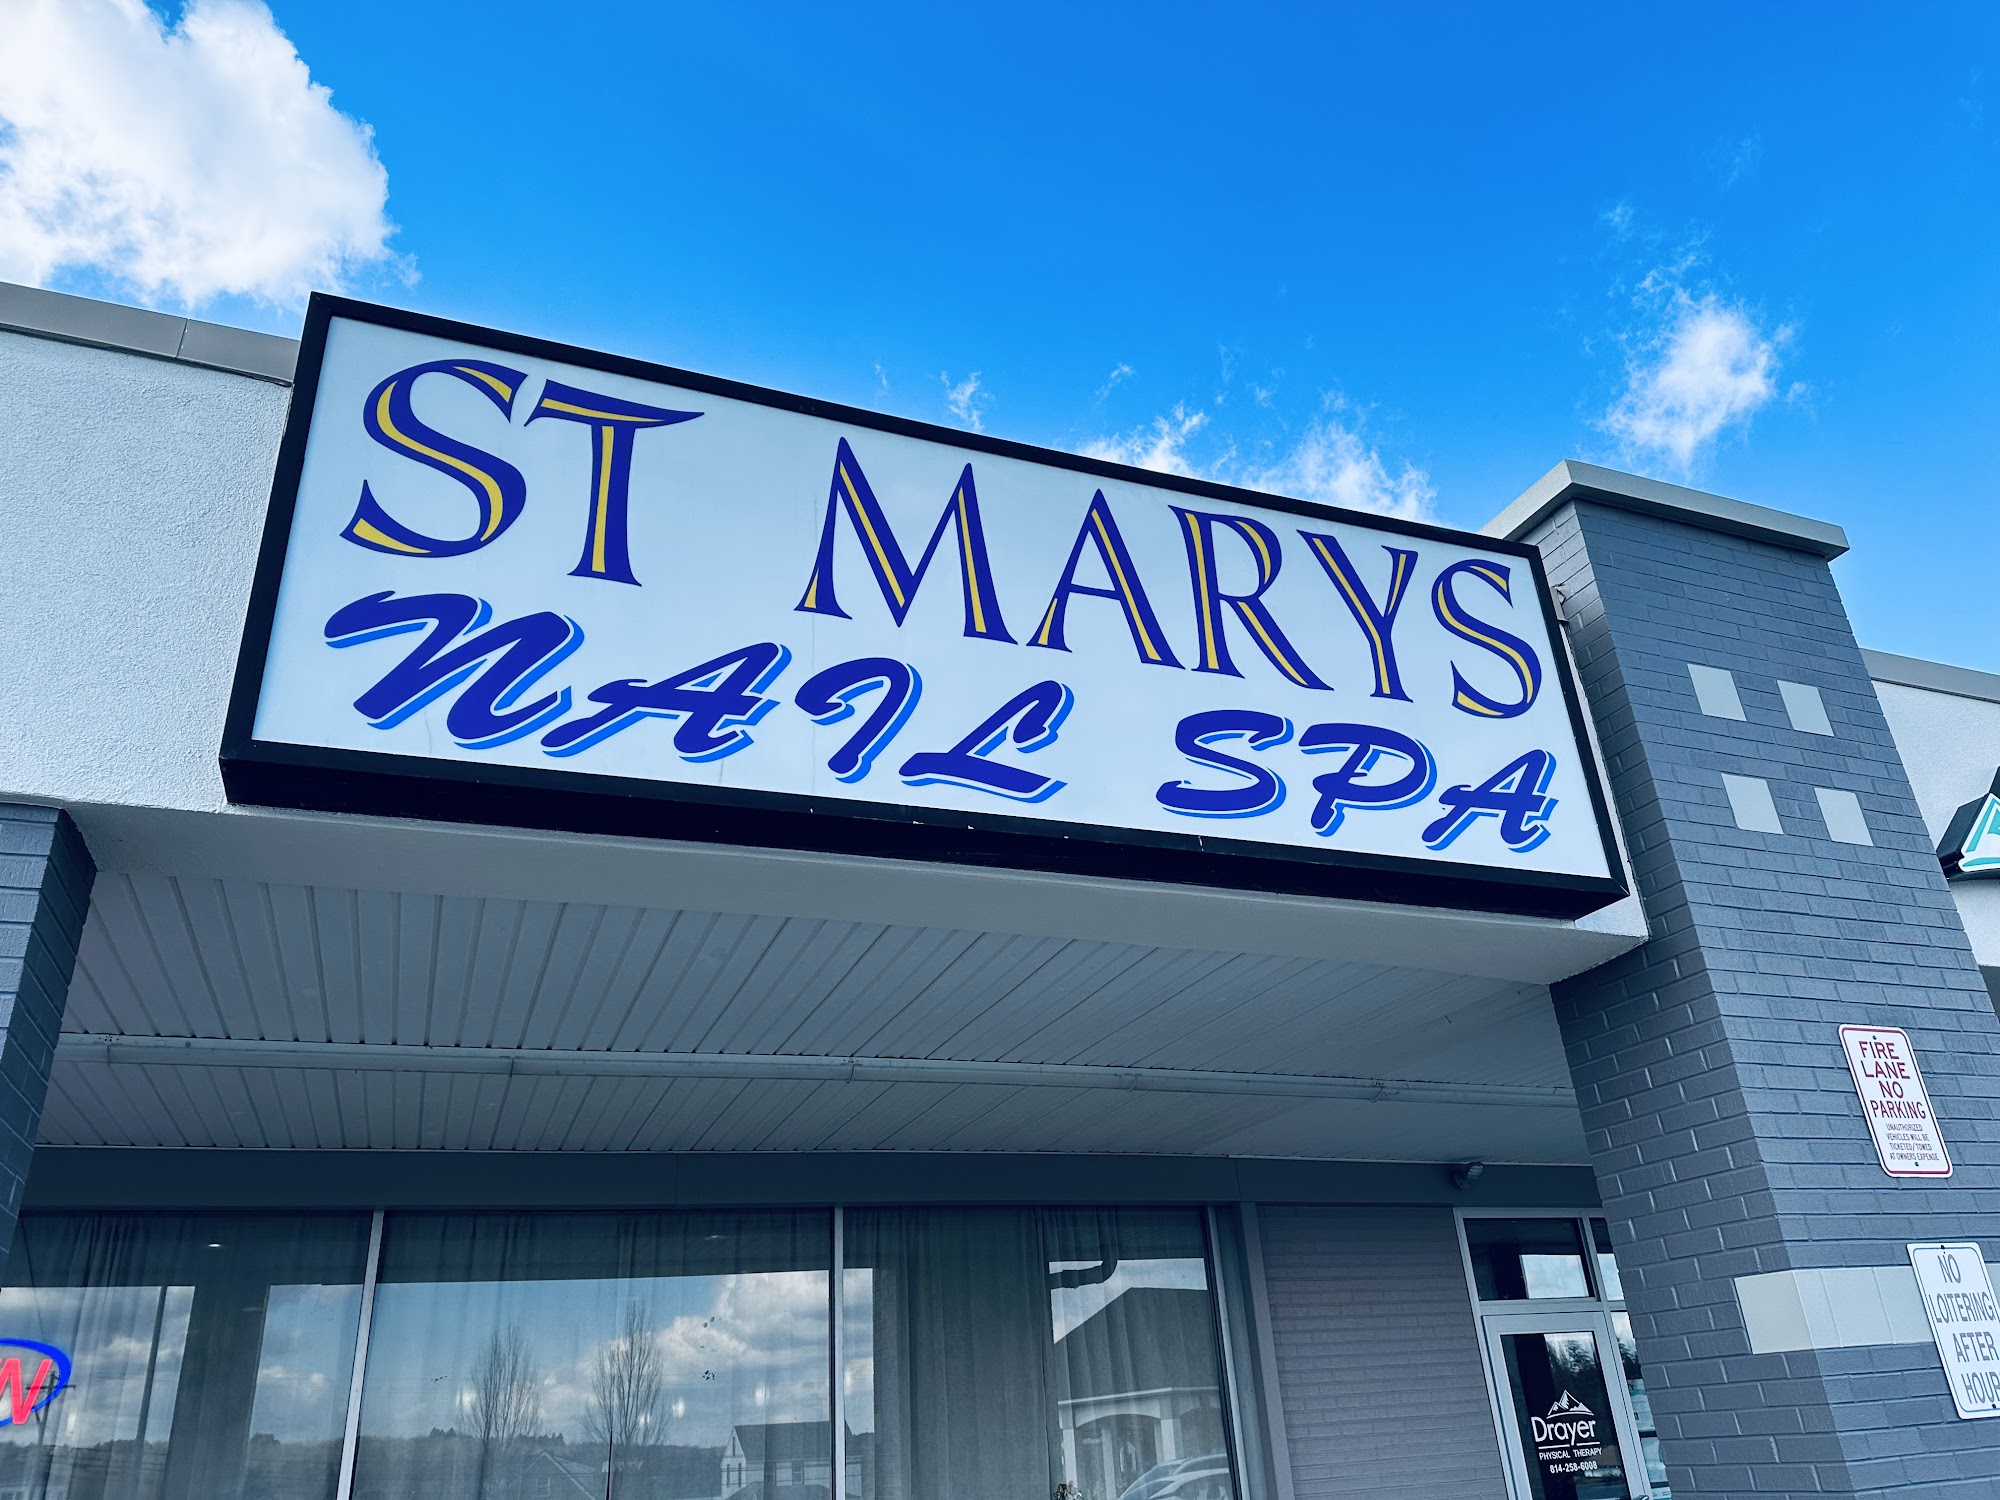 St Marys Nail Spa 814 South Street Marys Street, Street Marys Pennsylvania 15857